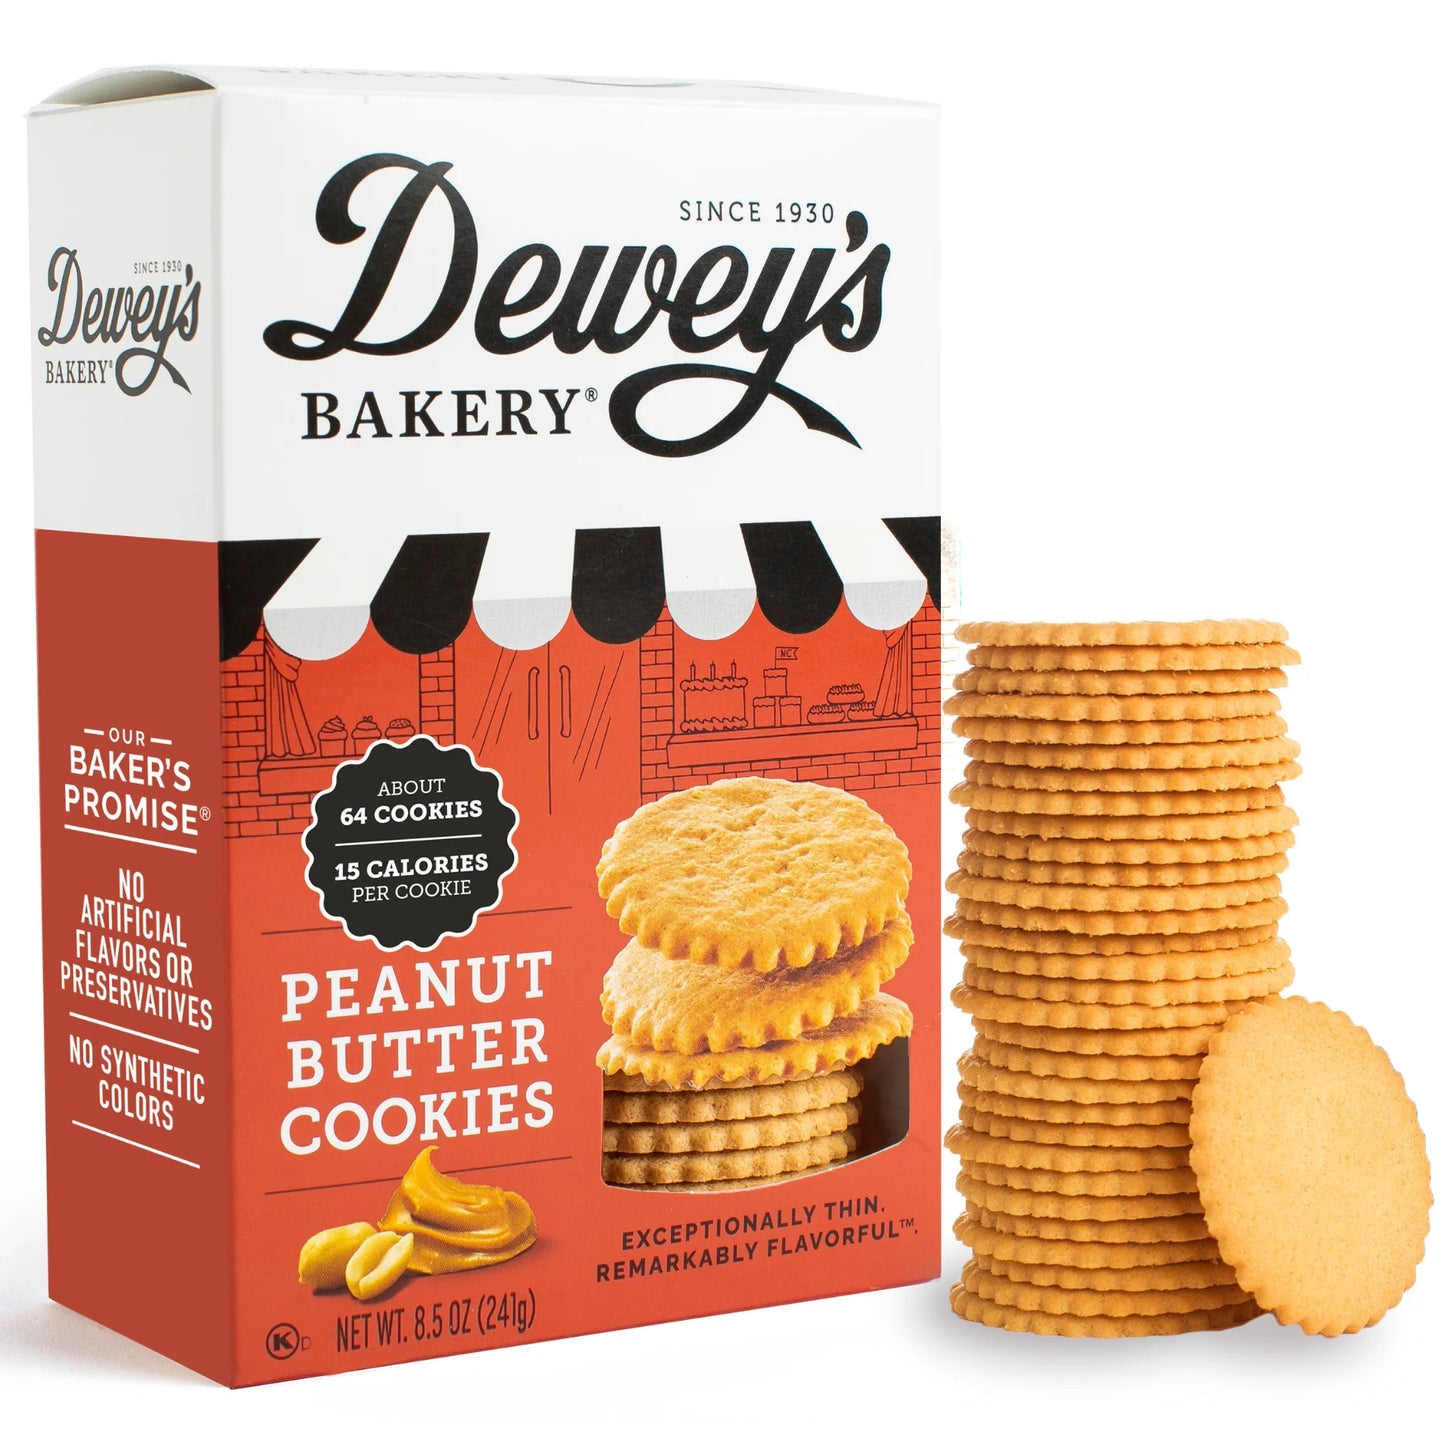 Dewey’s Peanut Butter Cookie Box